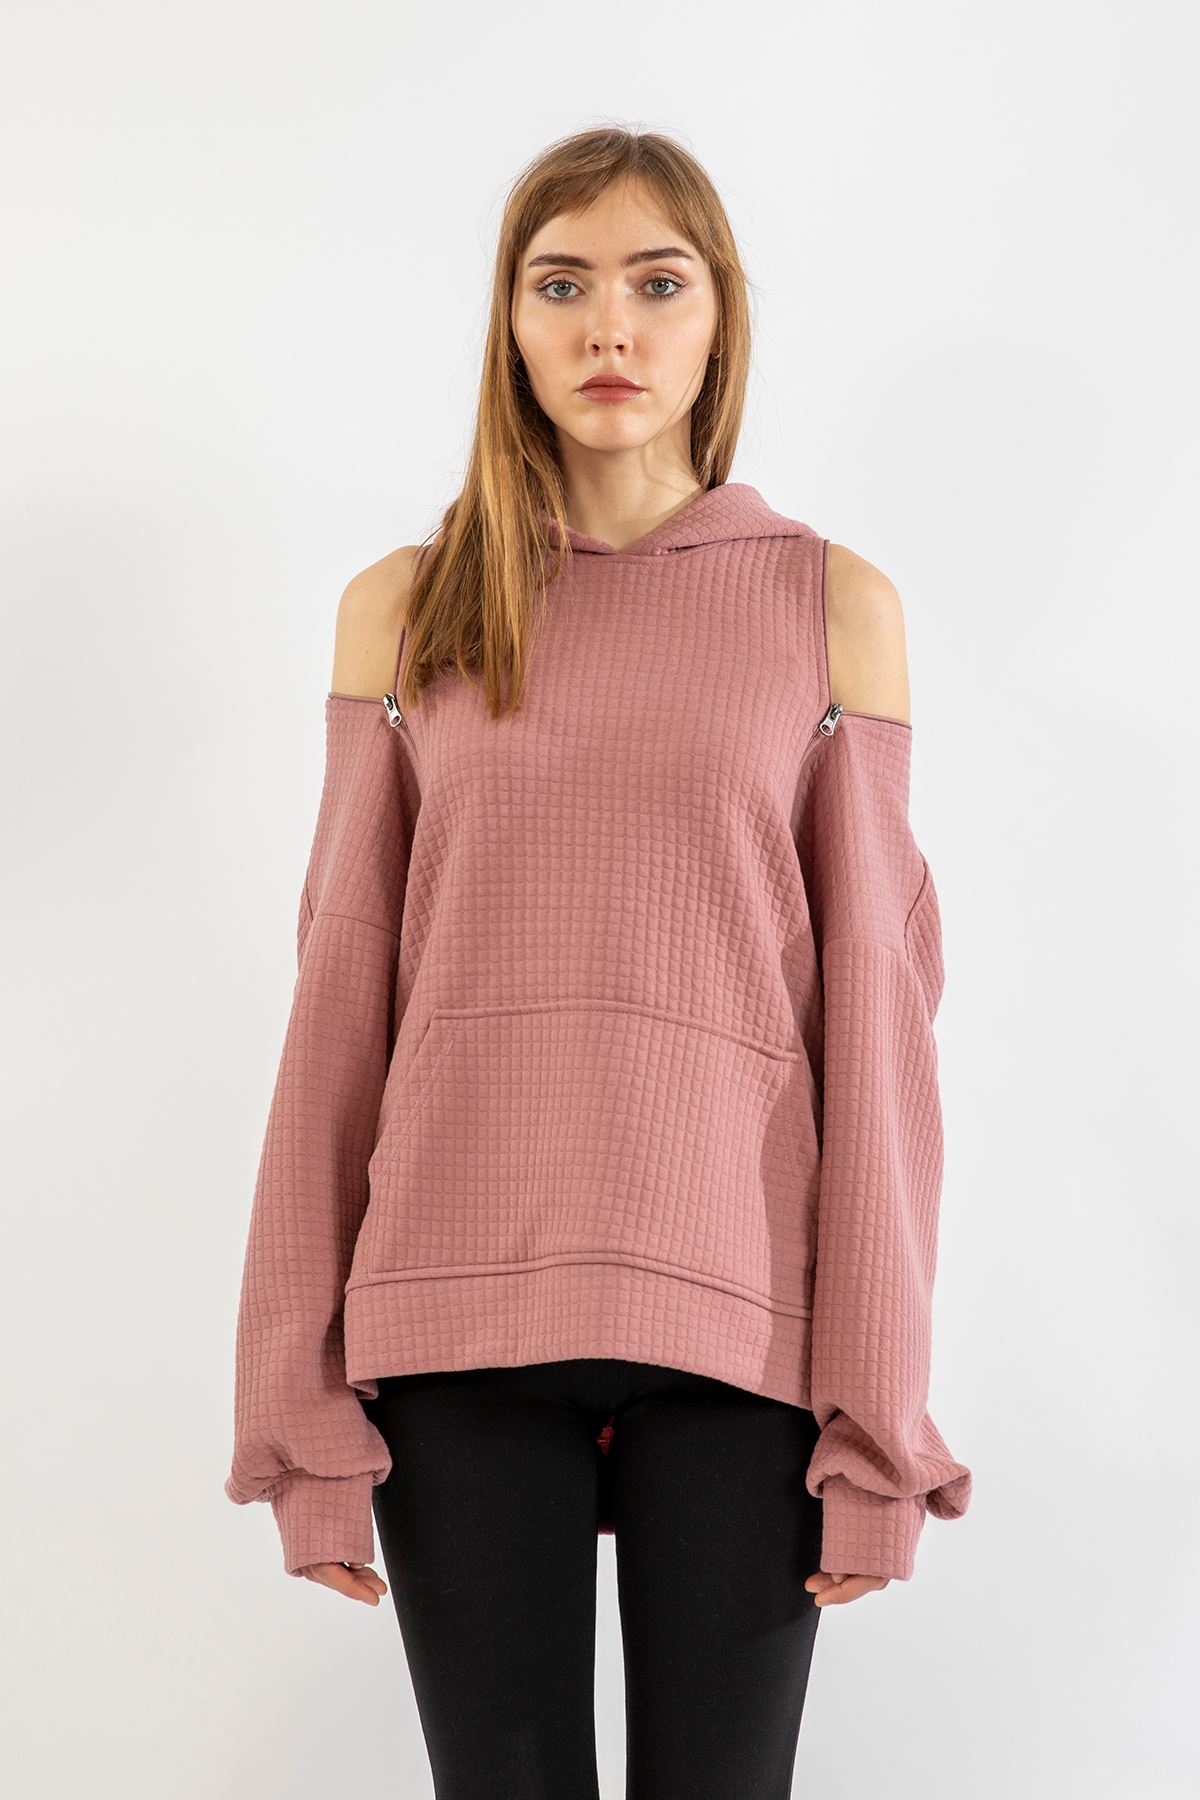 Quilted Fabric Hooded Hip Height Oversize Zip Detailed Women Sweatshirt - Rose 